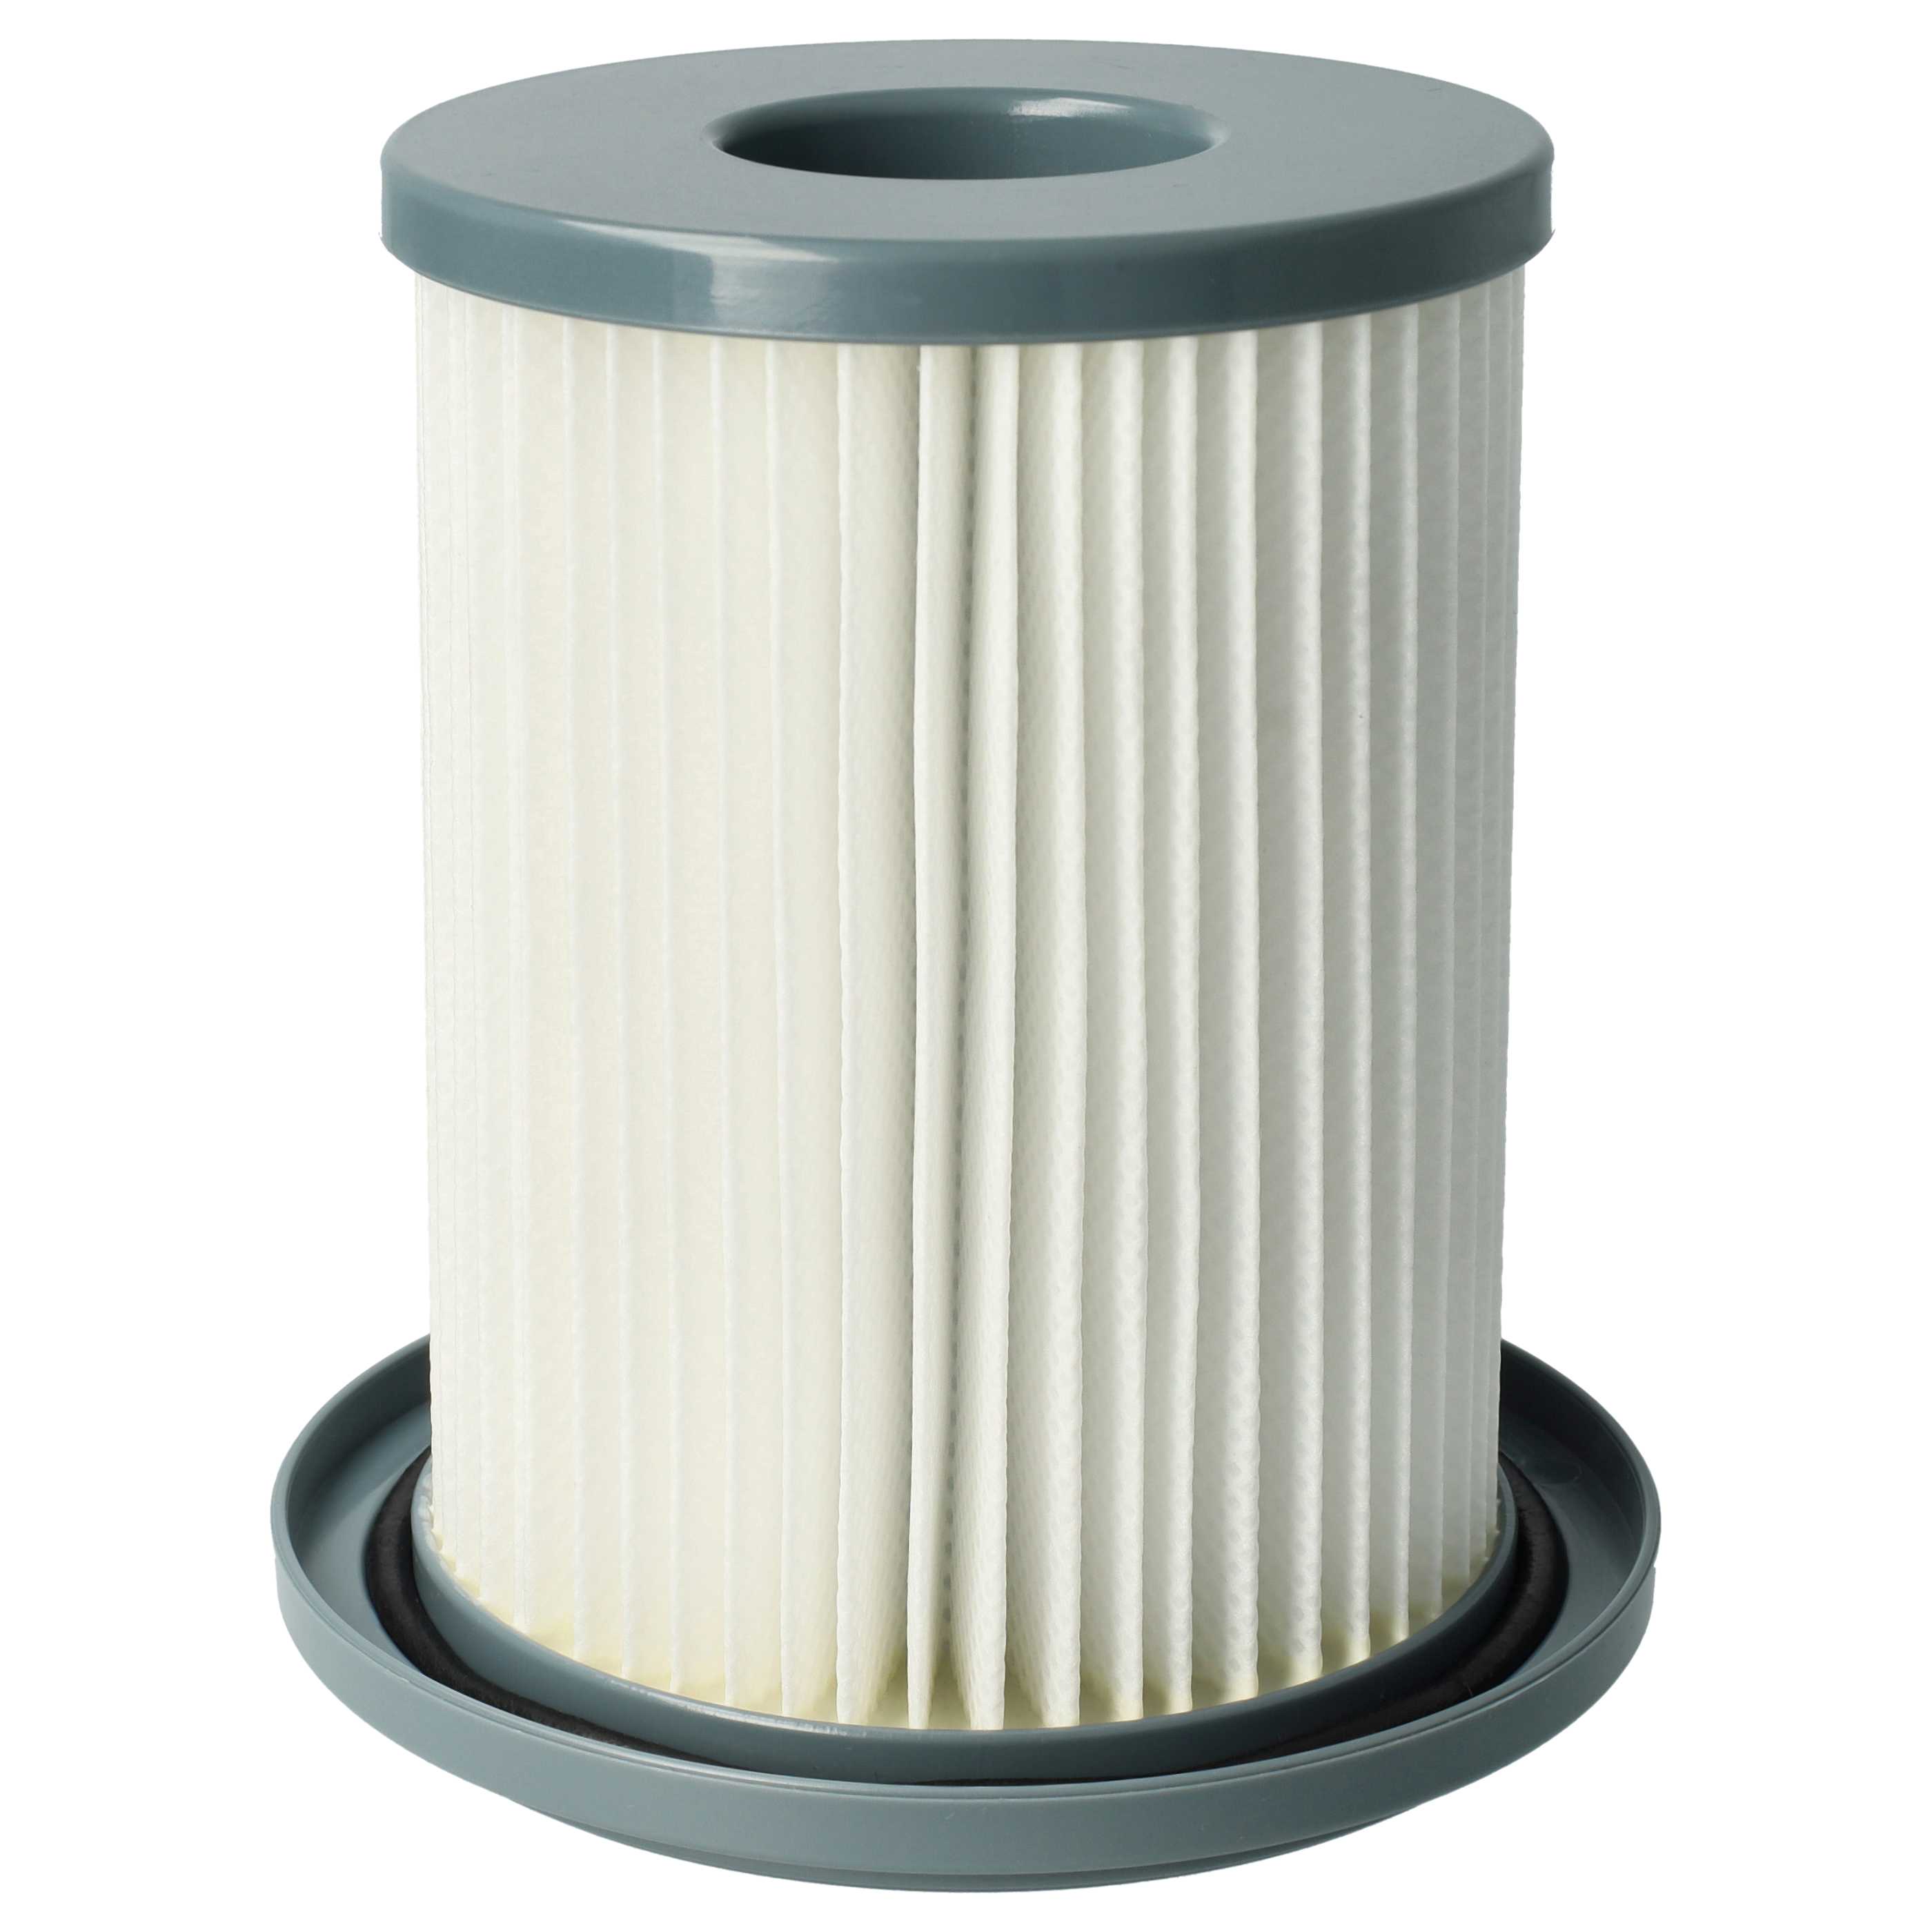 1x HEPA filter replaces Philips 432200909790, 432200493320 for PhilipsVacuum Cleaner